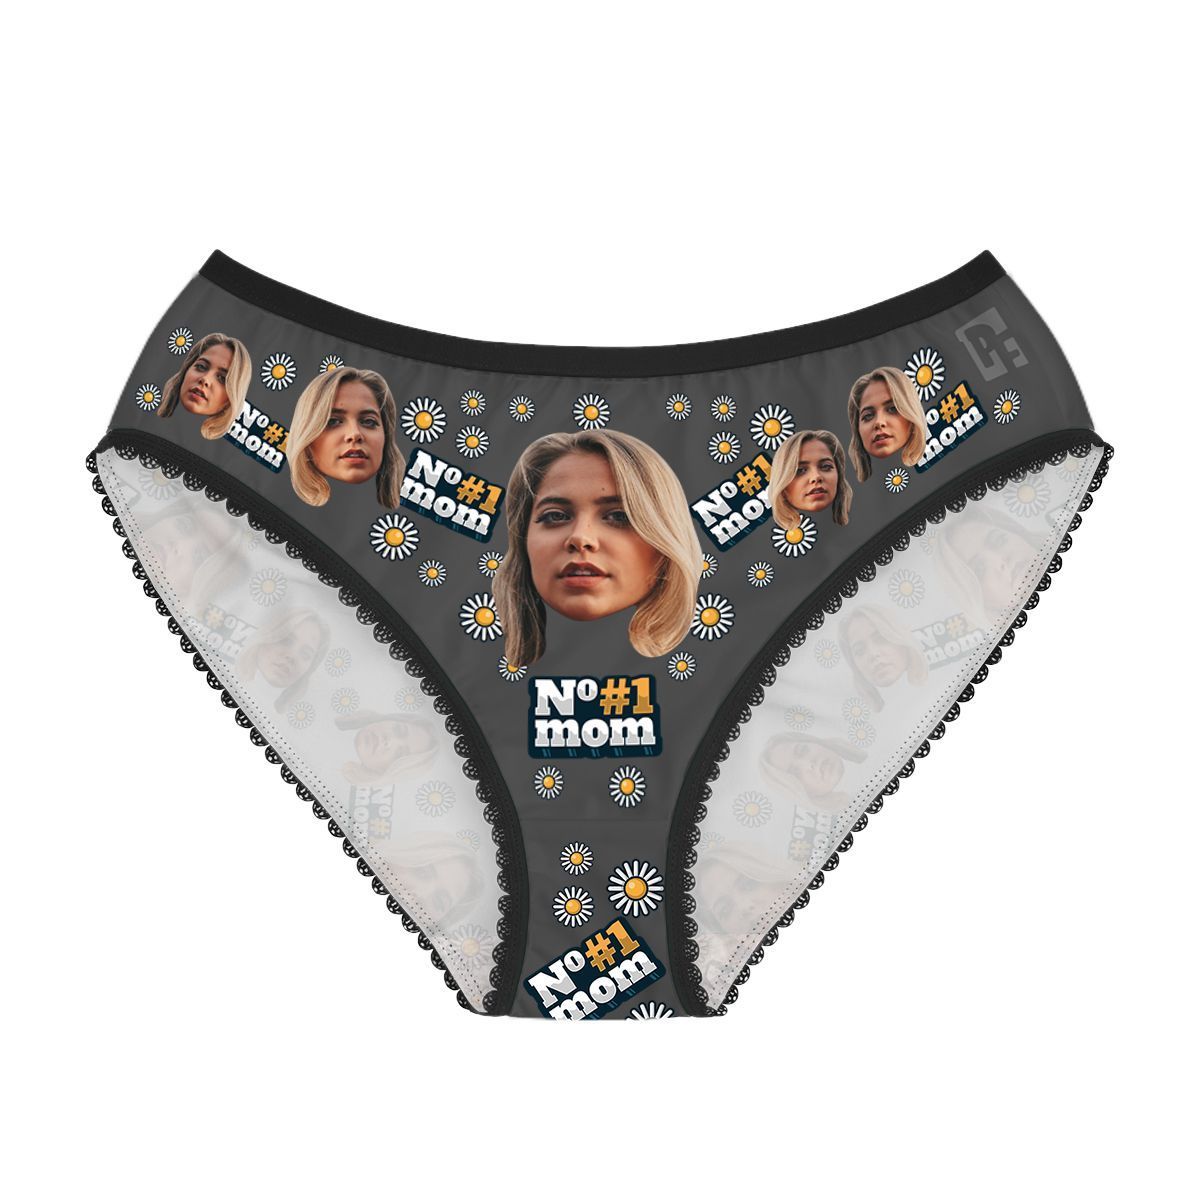 Dark #1 Mom women's underwear briefs personalized with photo printed on them